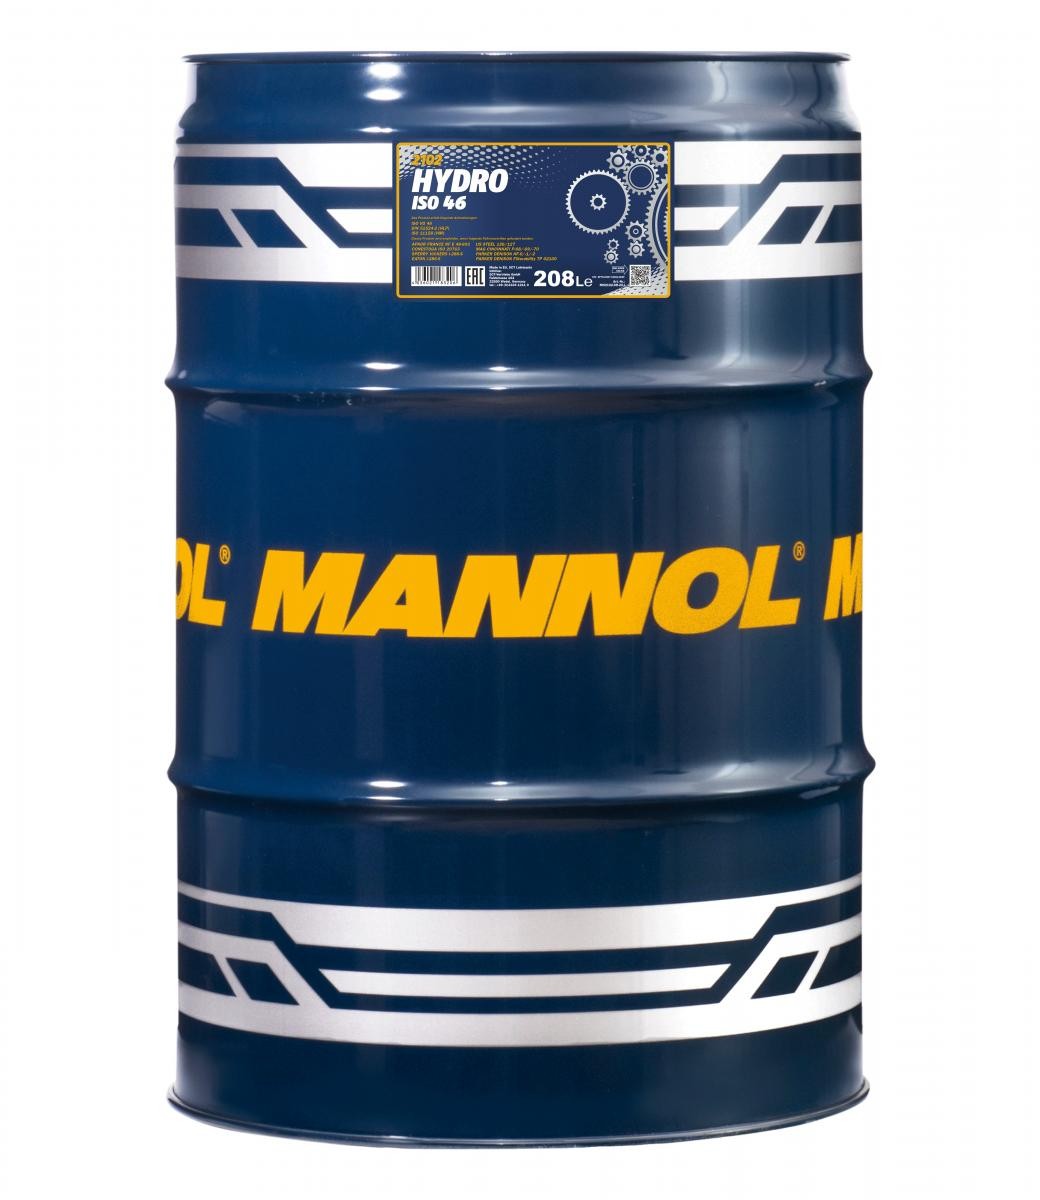 MANNOL Hydro ISO 46 Central Hydraulic Oil MN2102-DR buy